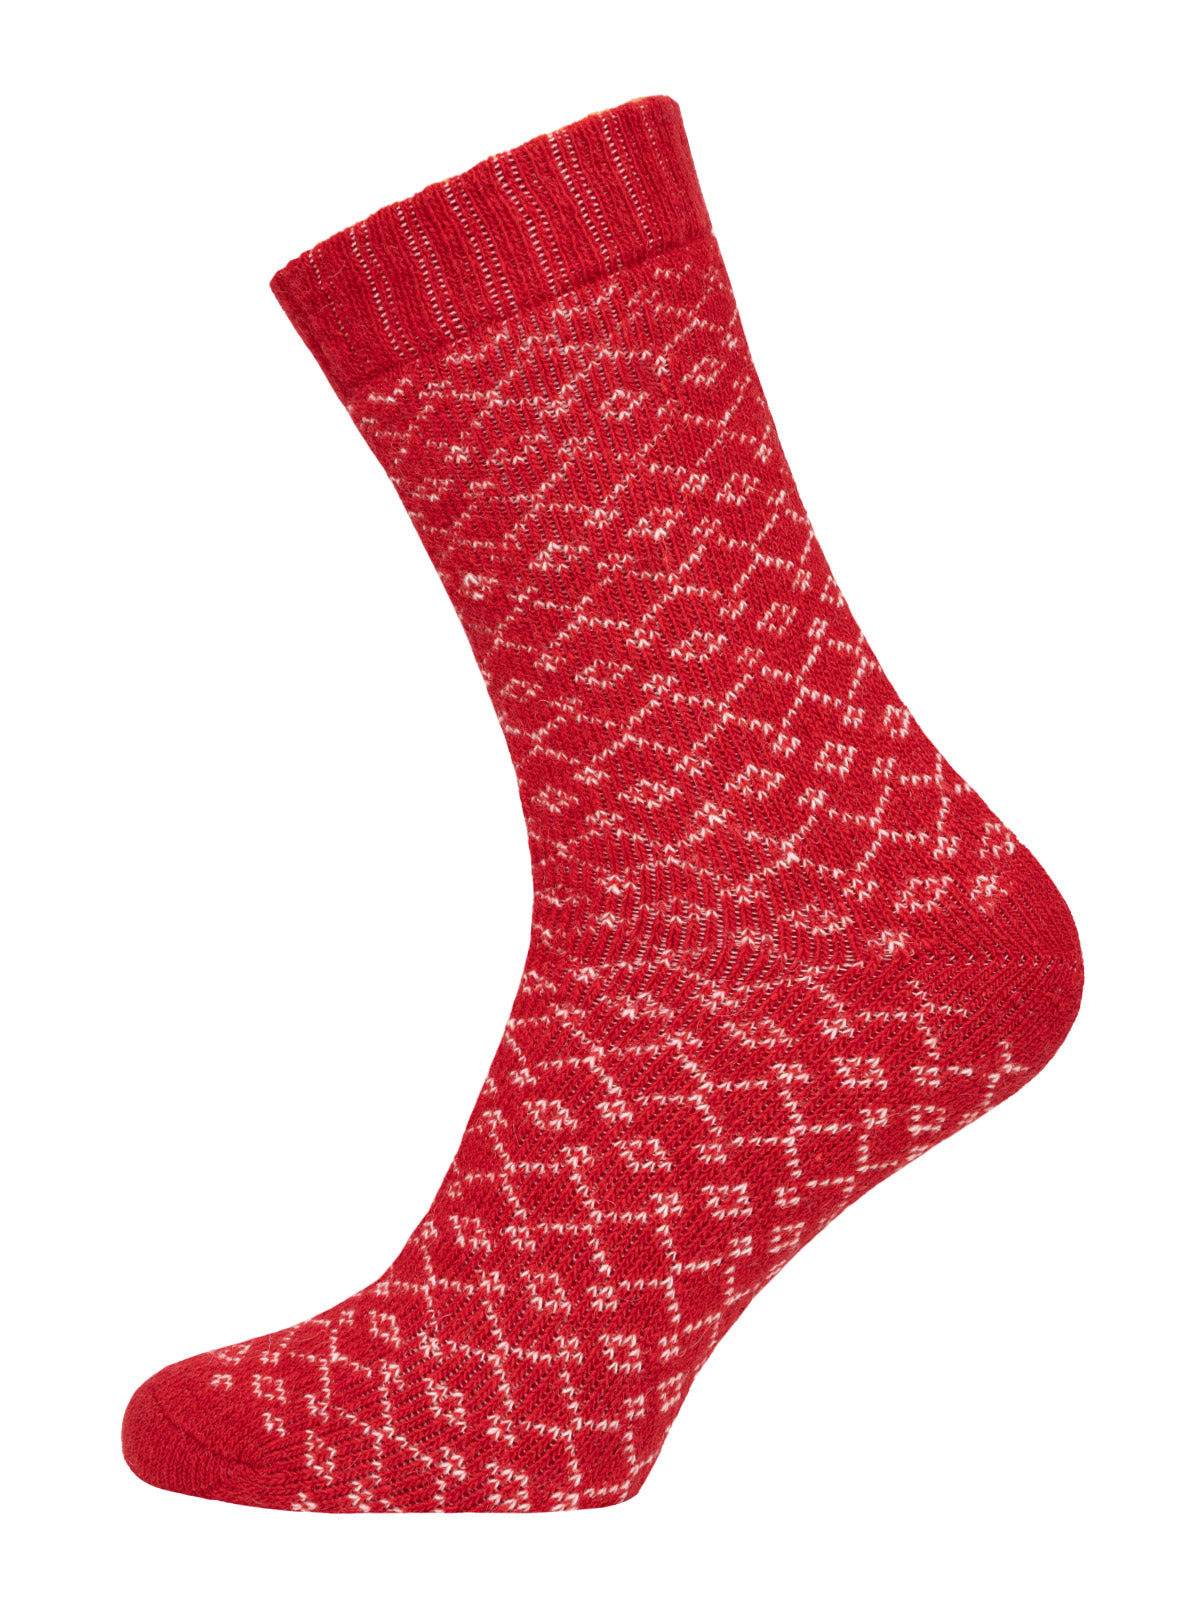 Socks: Diamond Pattern Red Plain Thick Wool Sock 45%